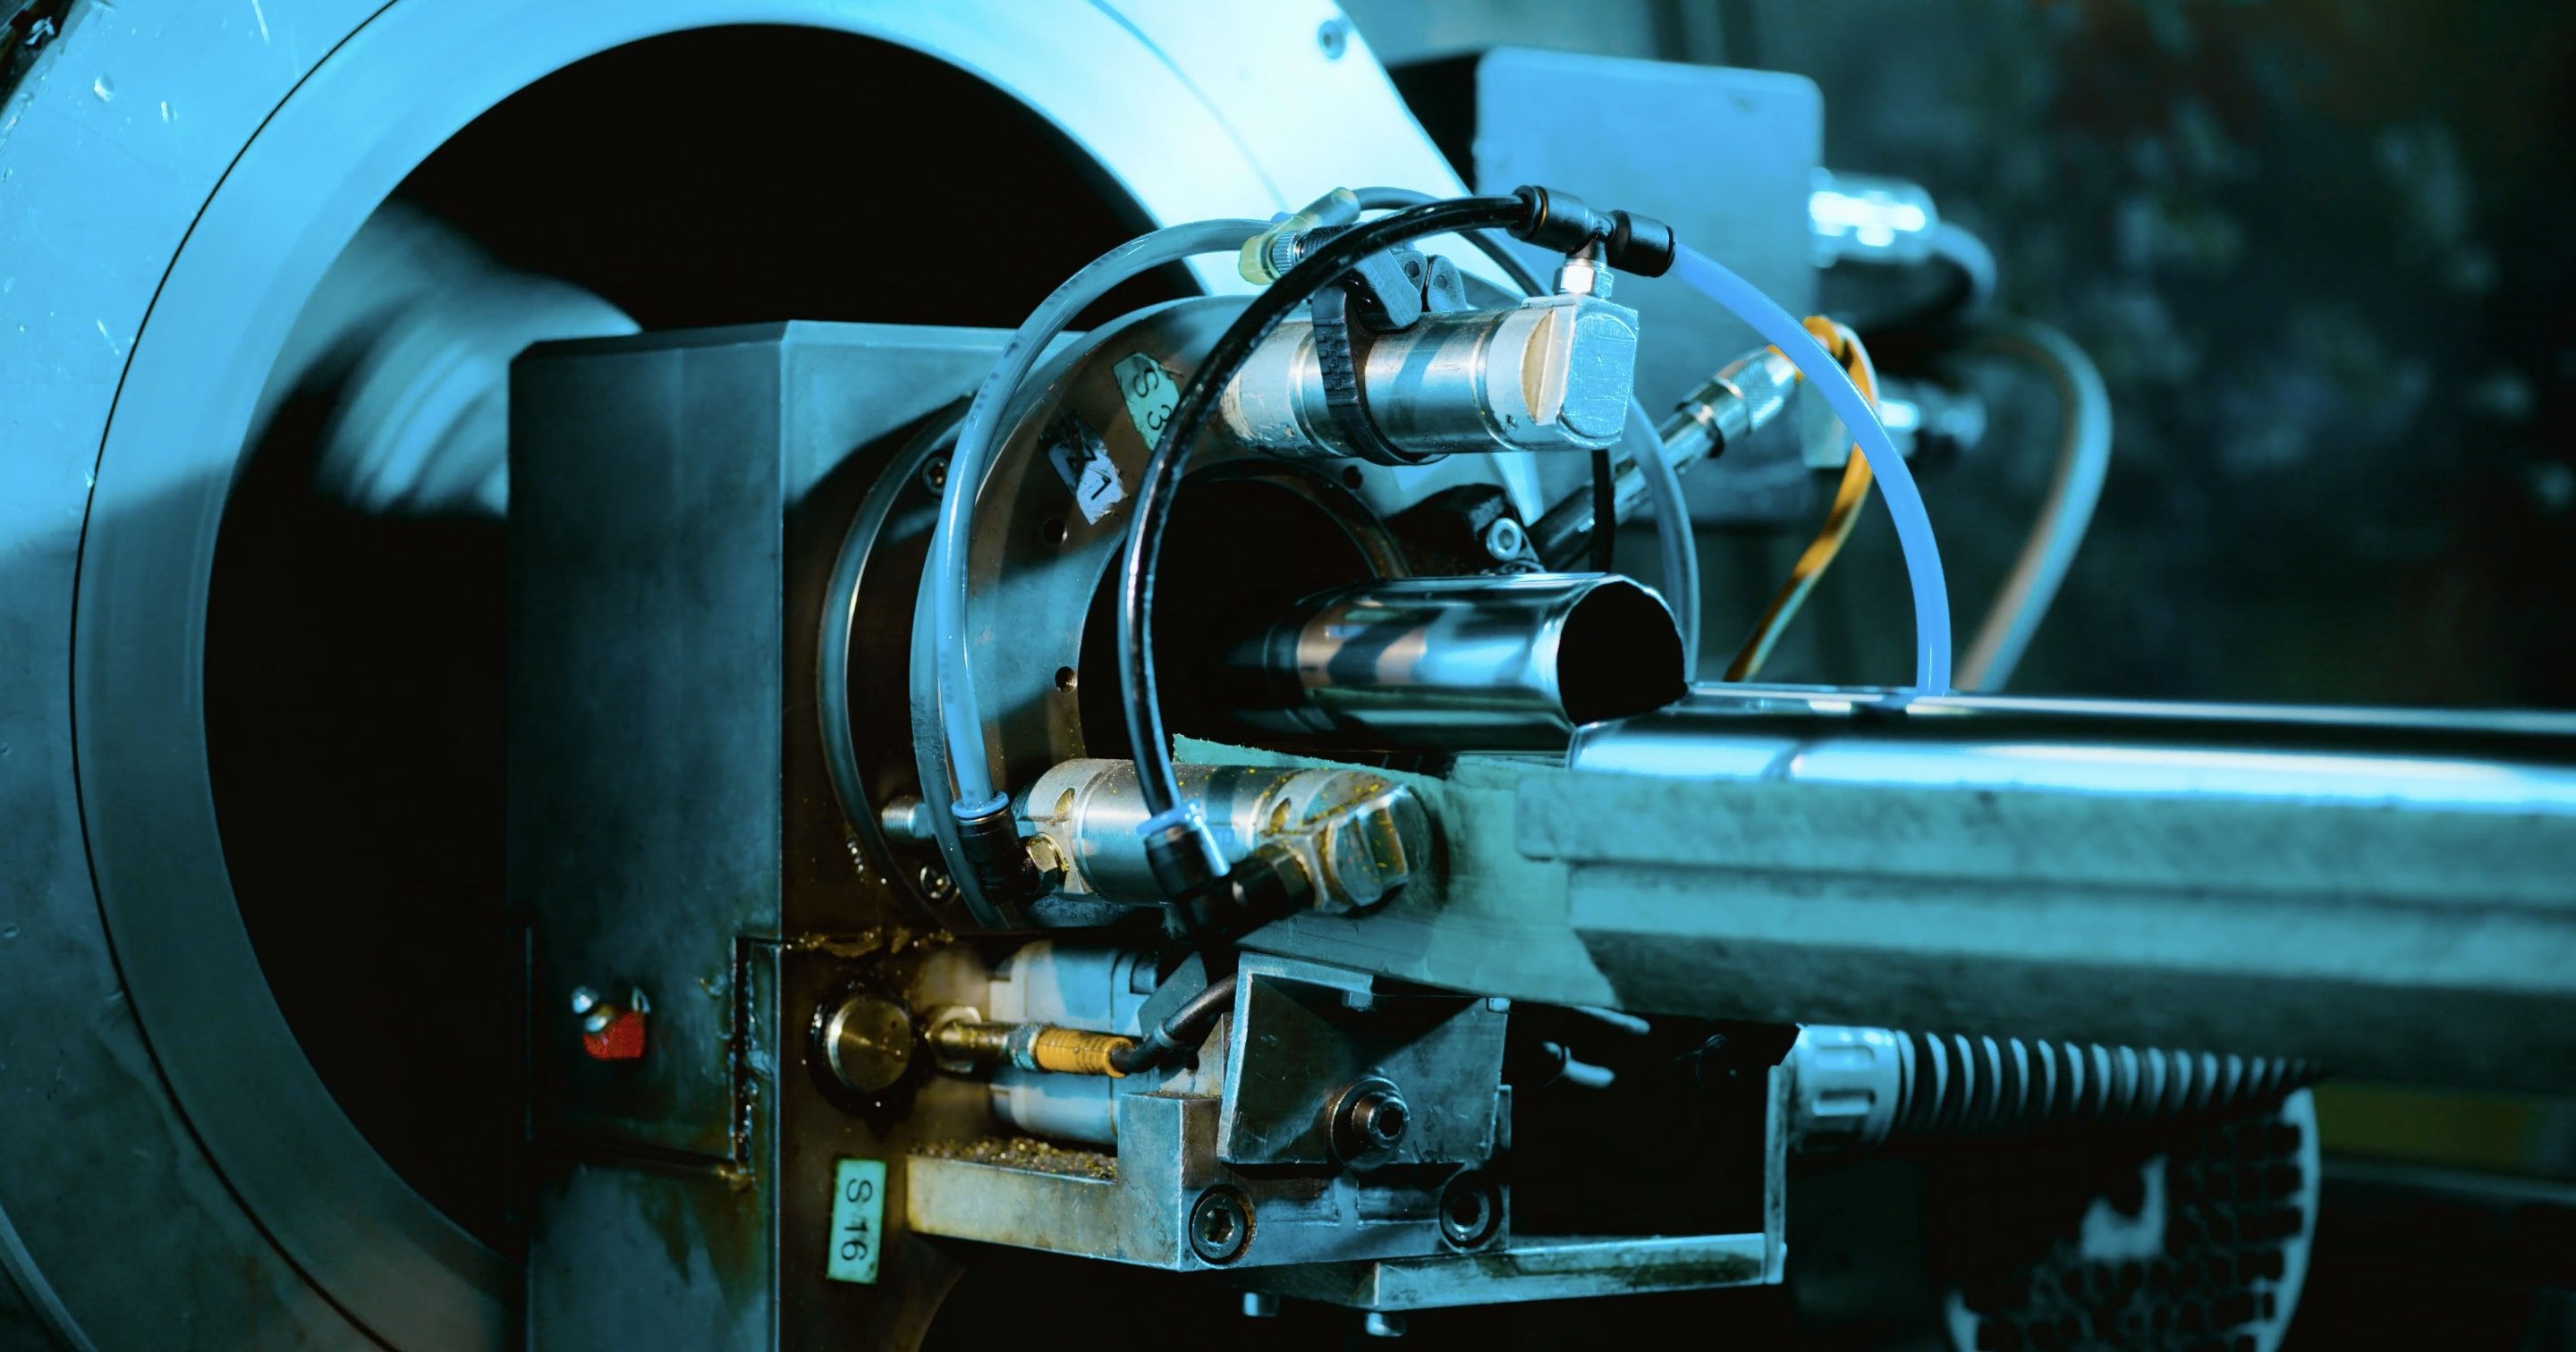 This image shows part of a machine for gas en fluid transportation at CoreDux